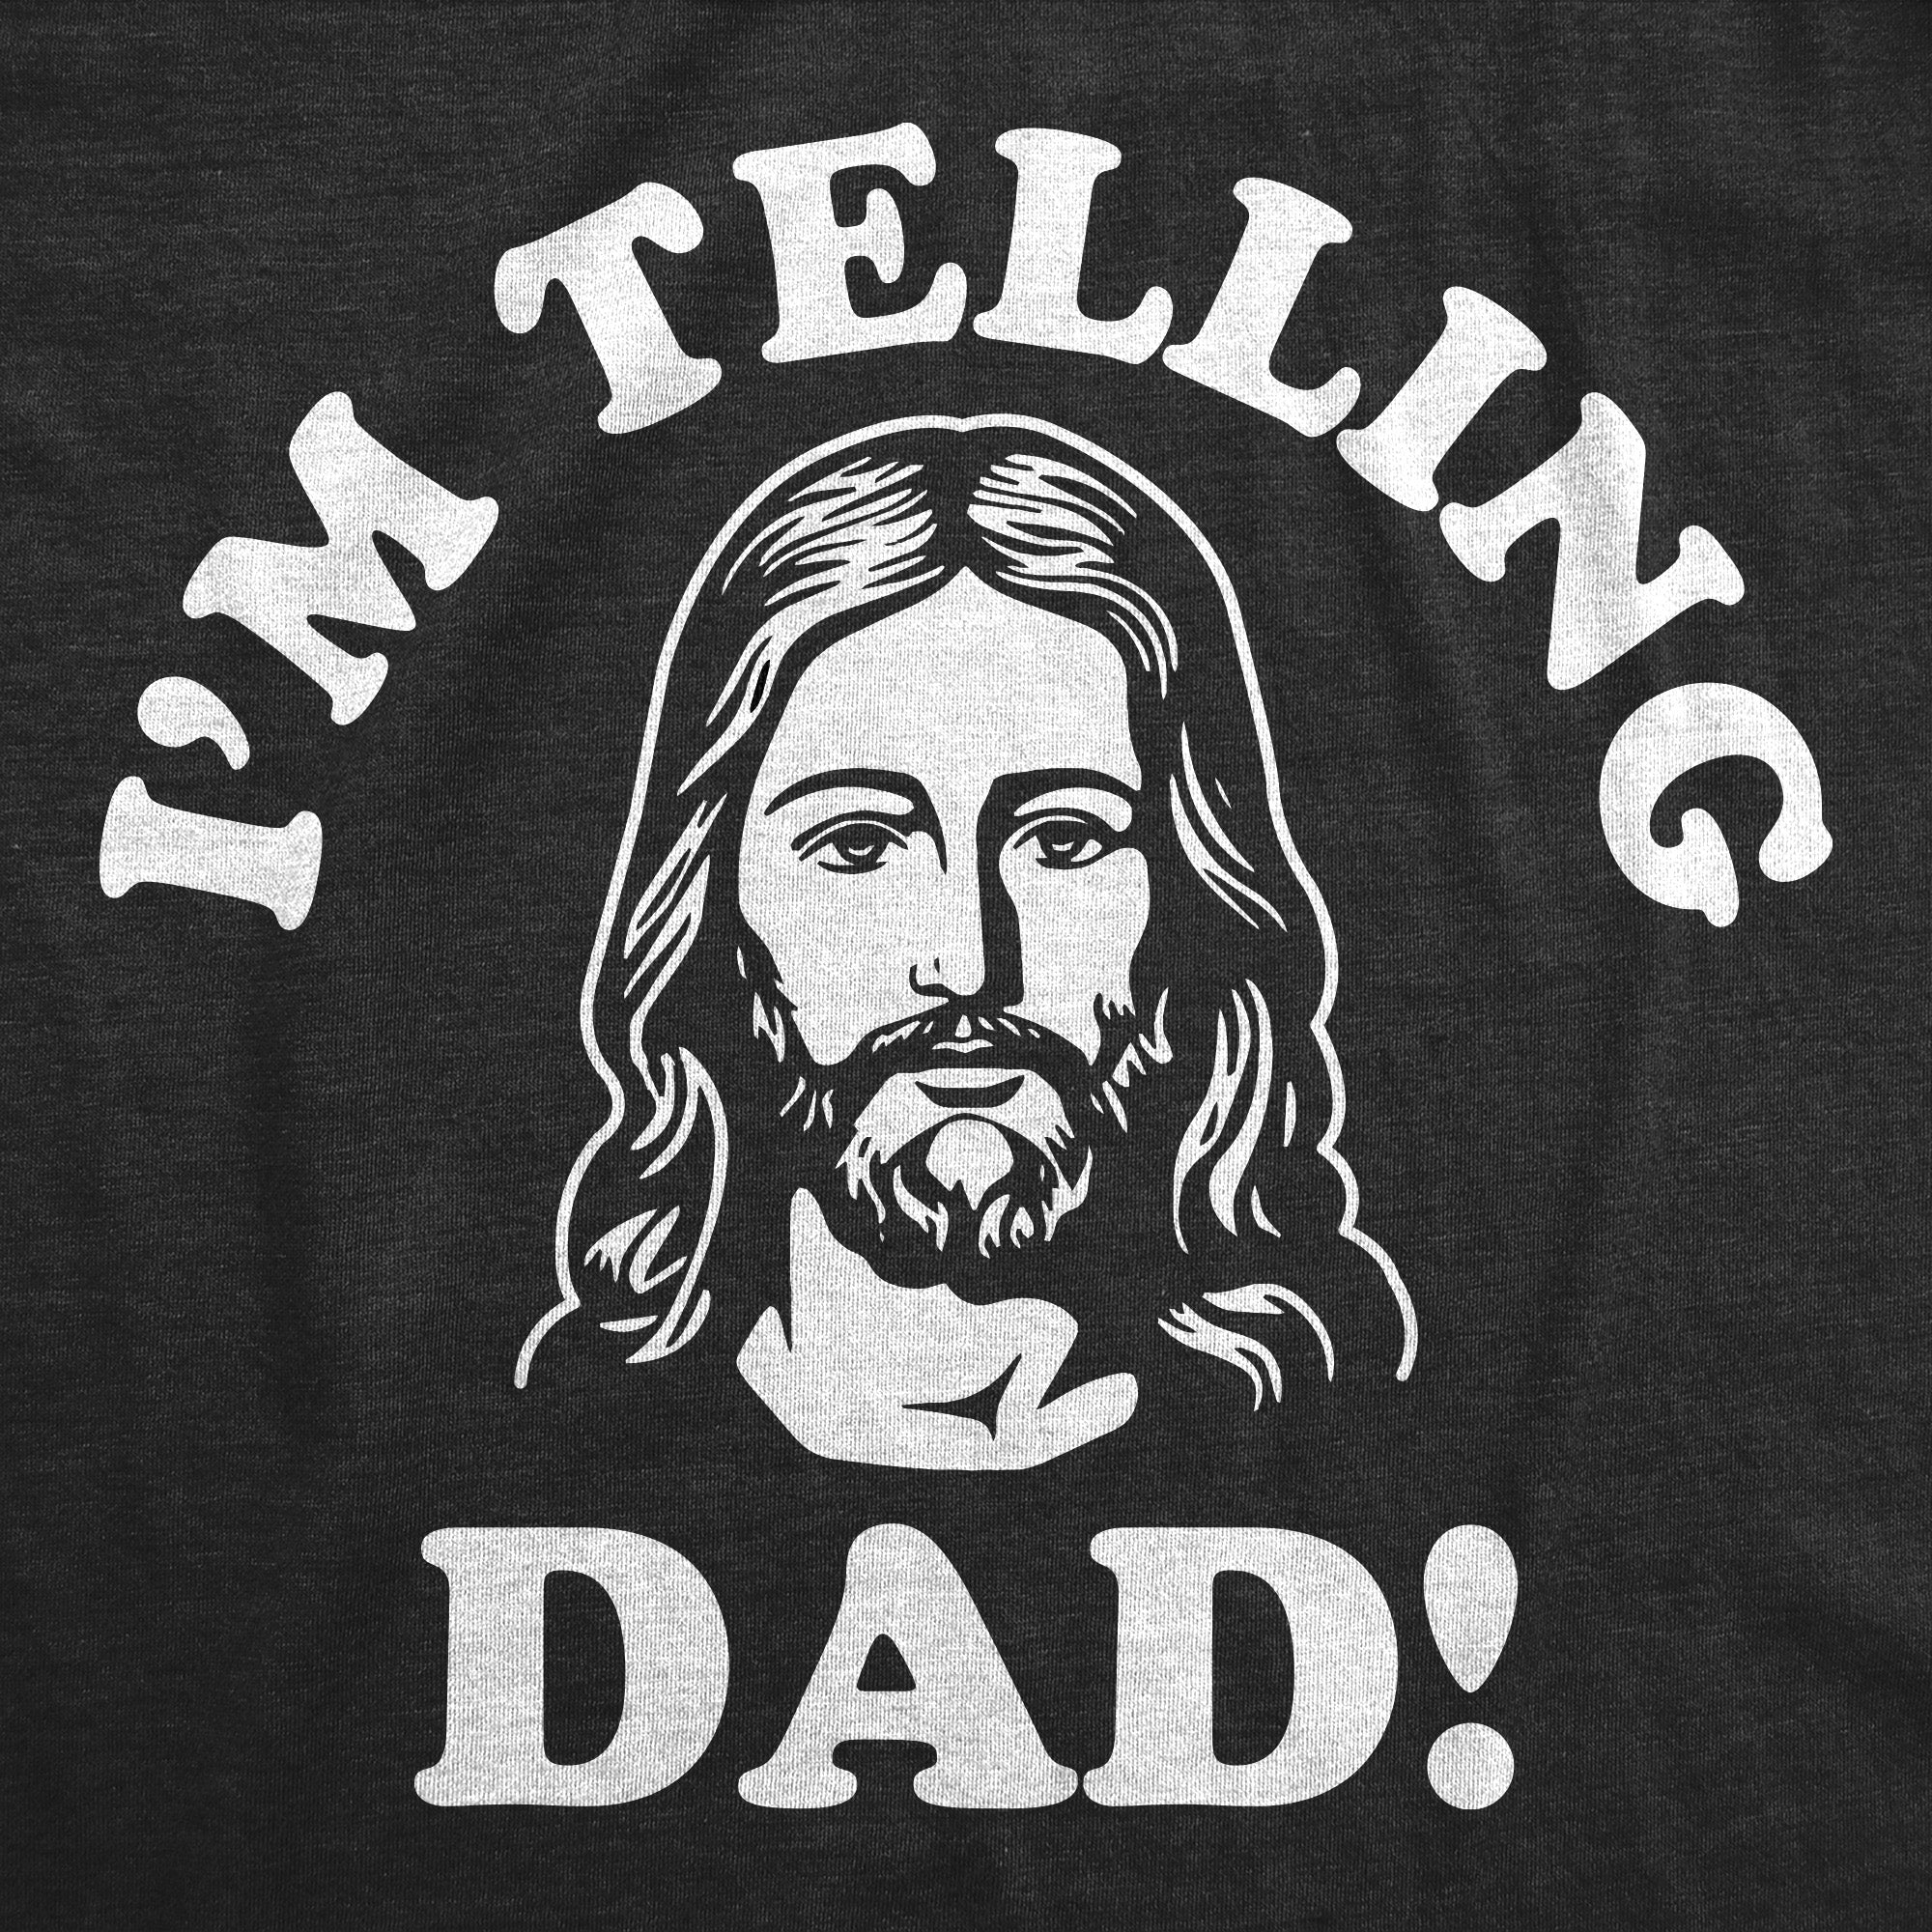 Funny Heather Black - Im Telling Dad Im Telling Dad Mens T Shirt Nerdy sarcastic Religion Tee